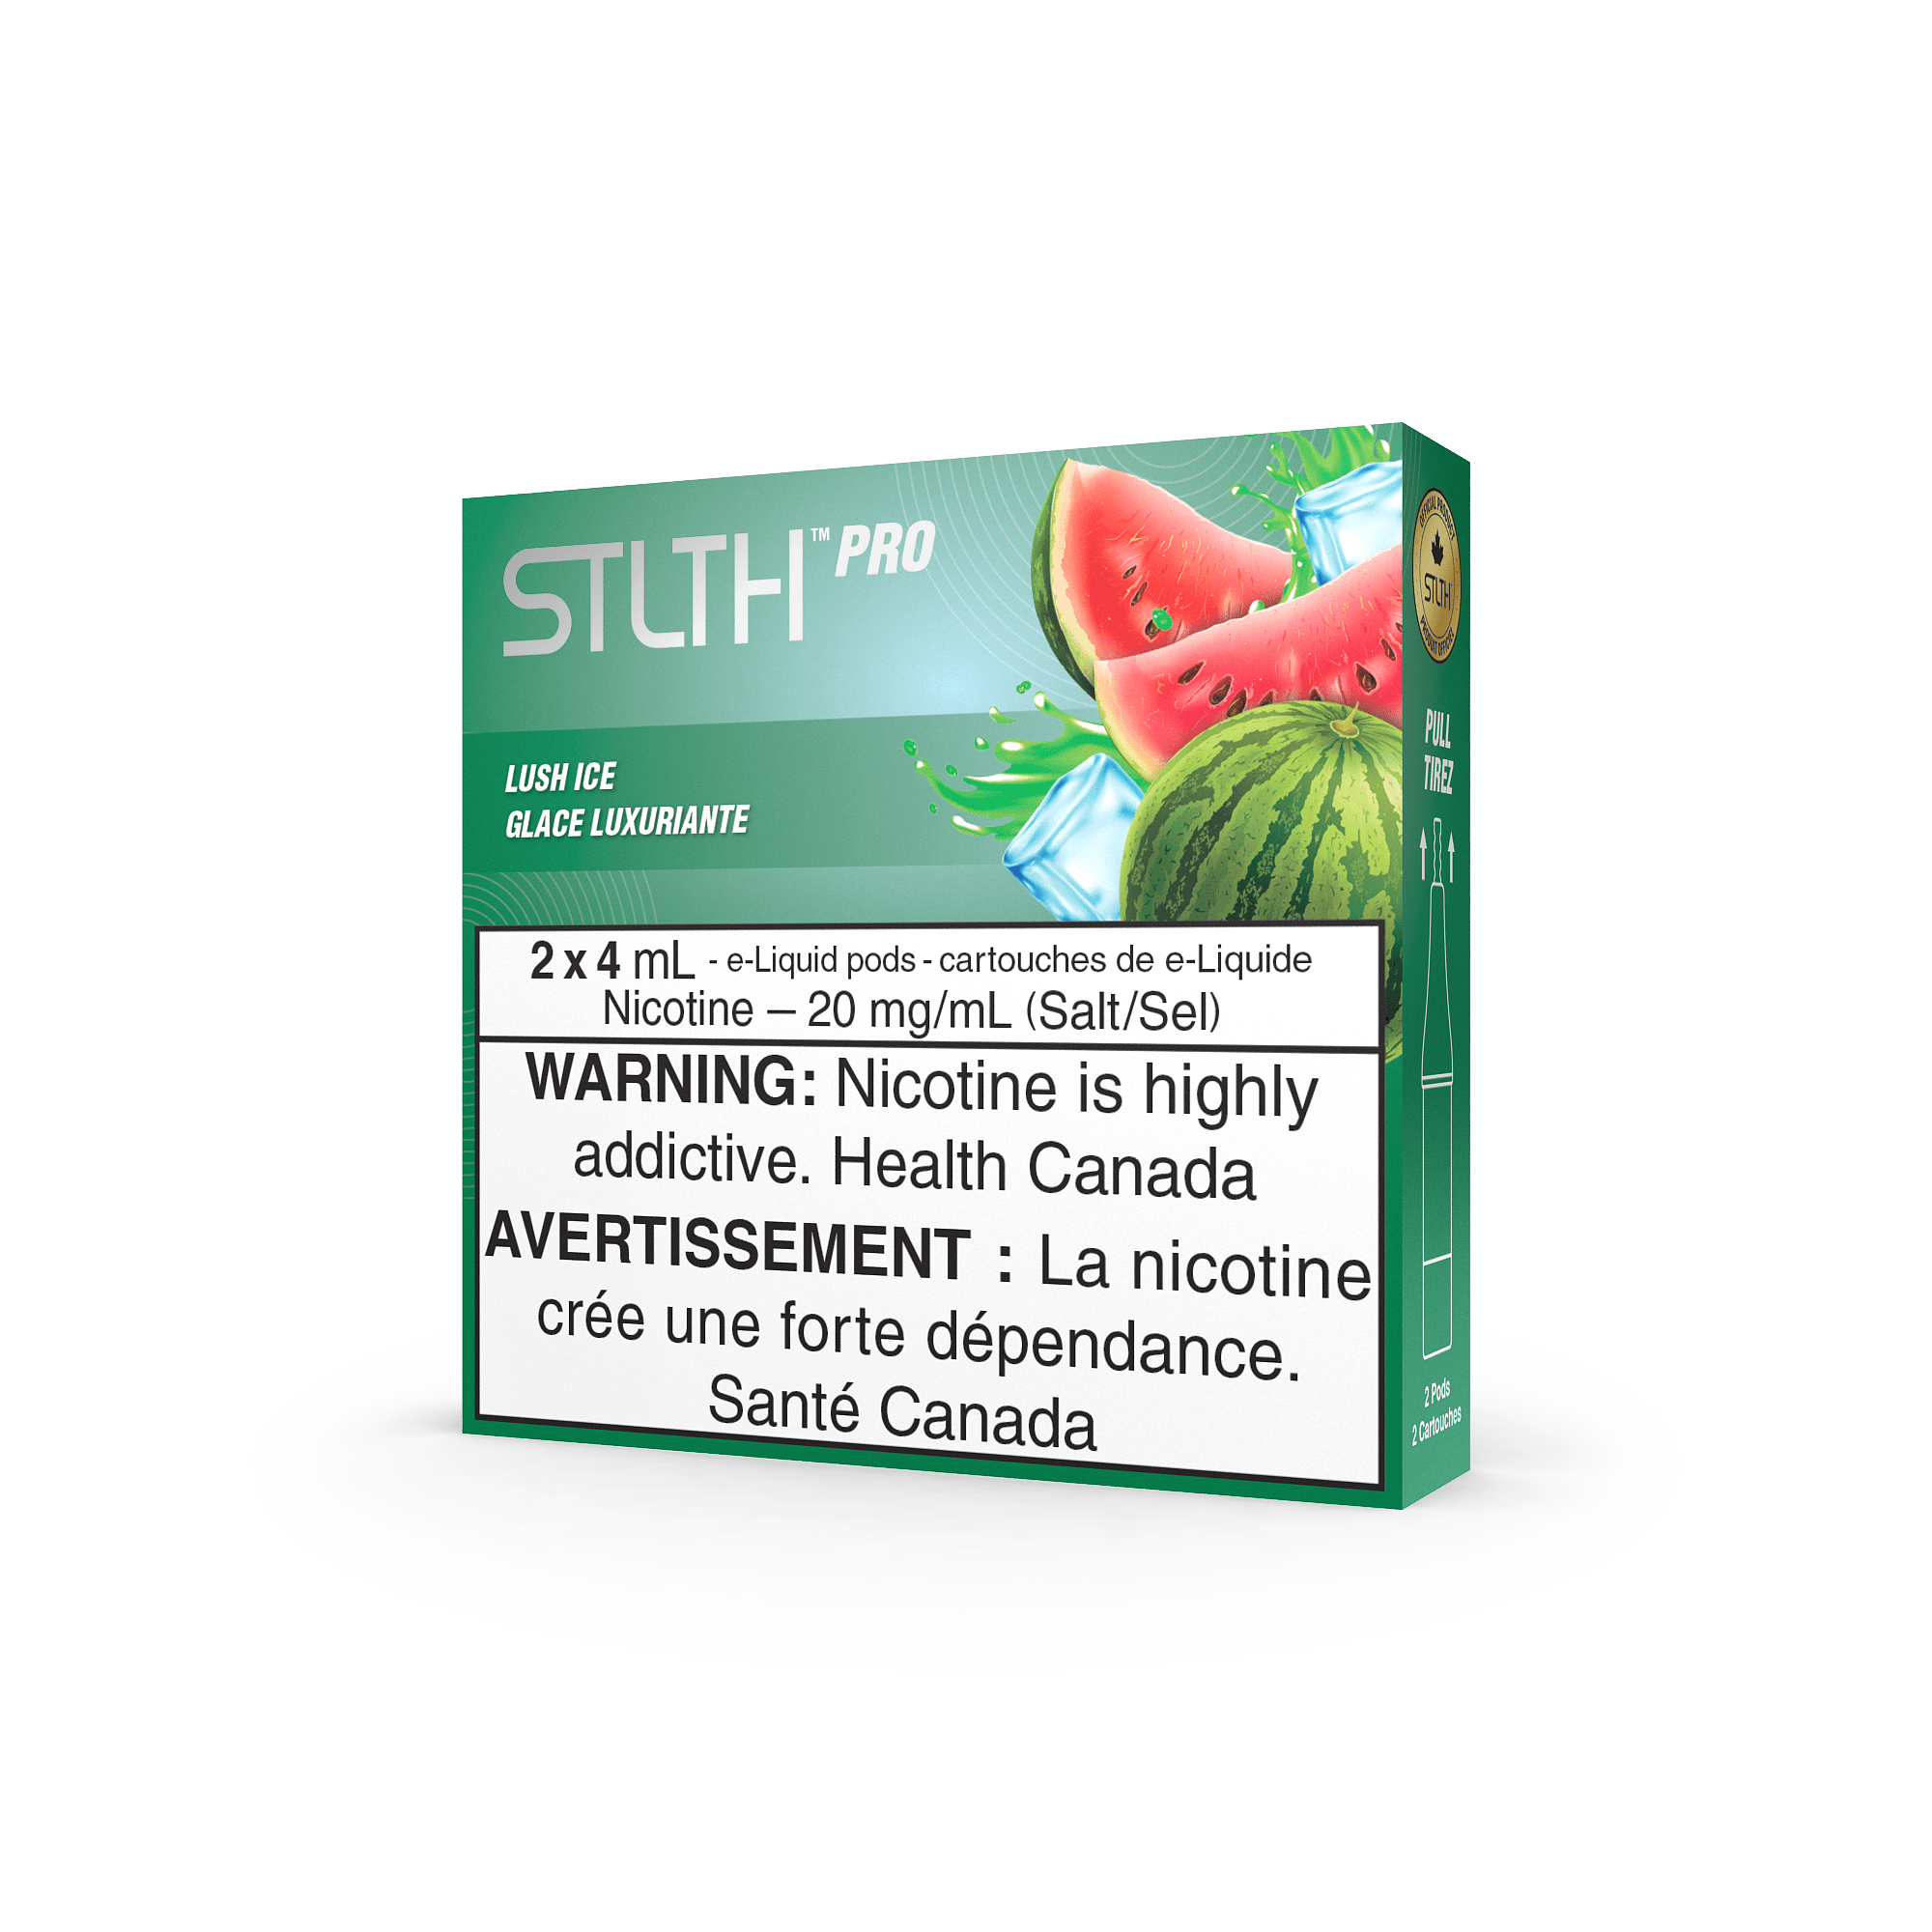 STLTH Pro - Lush Ice Vape Pod available on Canada online vape shop